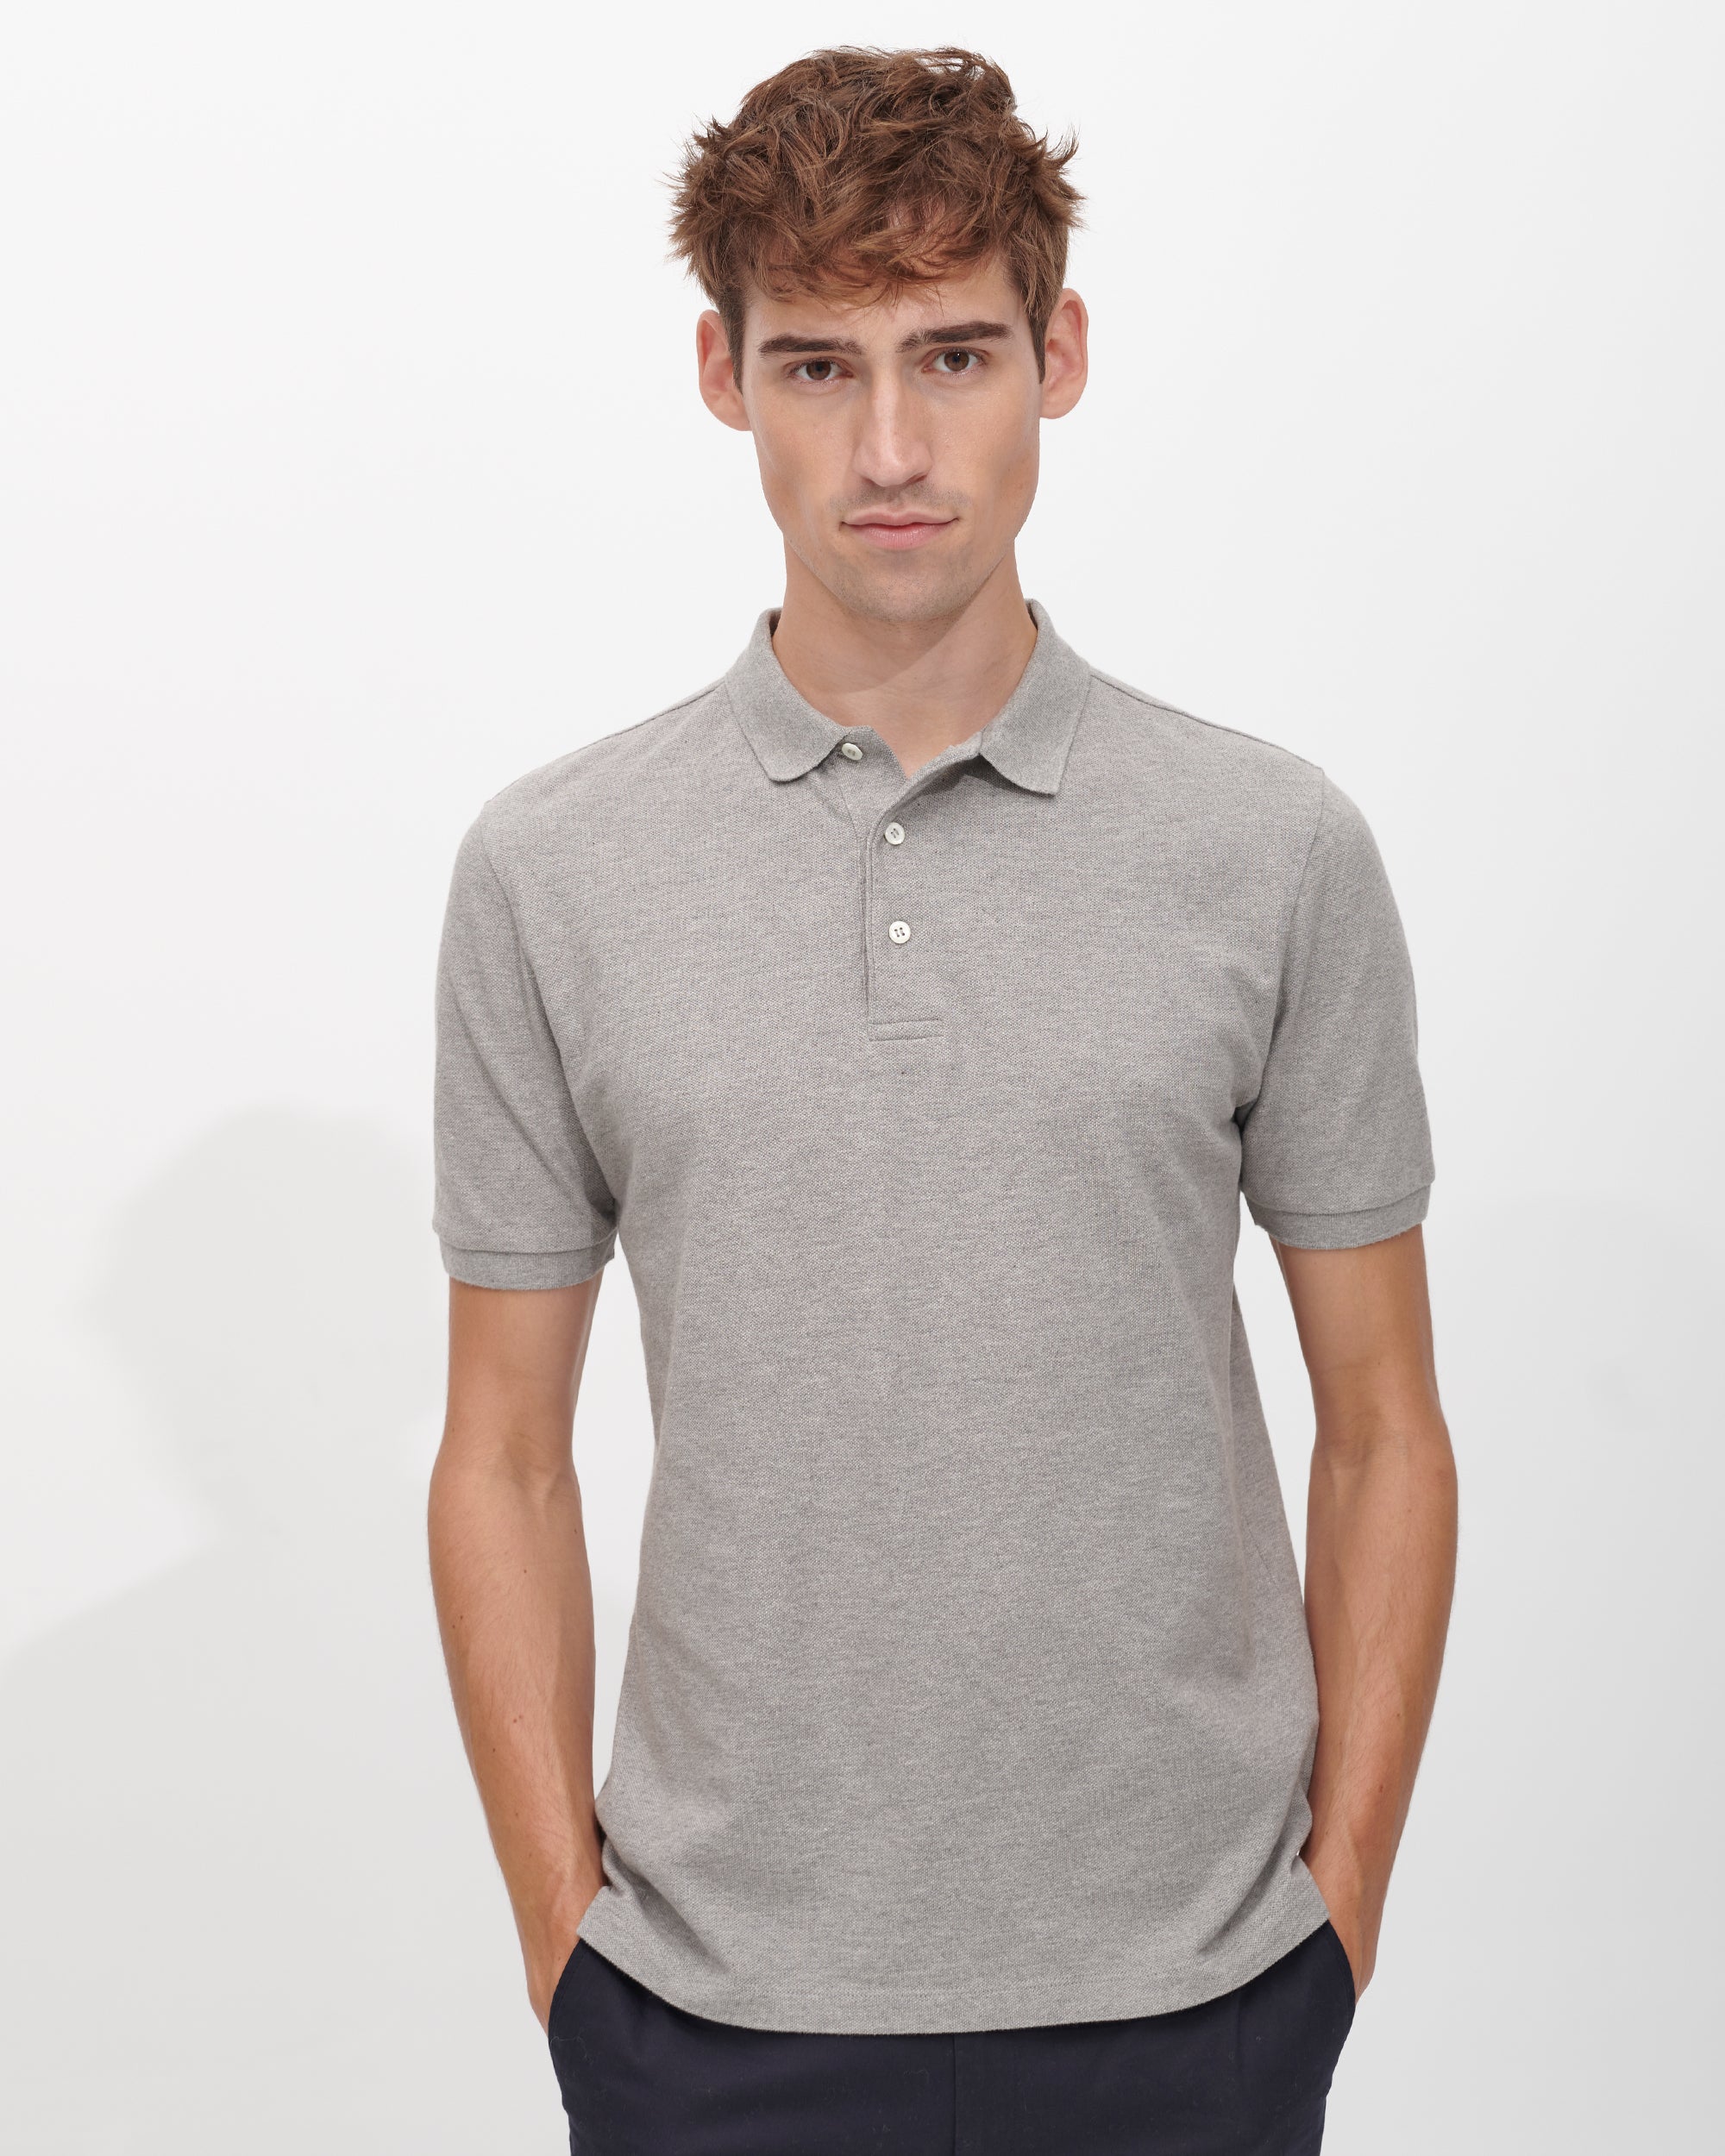 Das Perfekte Poloshirt | Premium Polohemd für Herren in Grau | Poloshirts